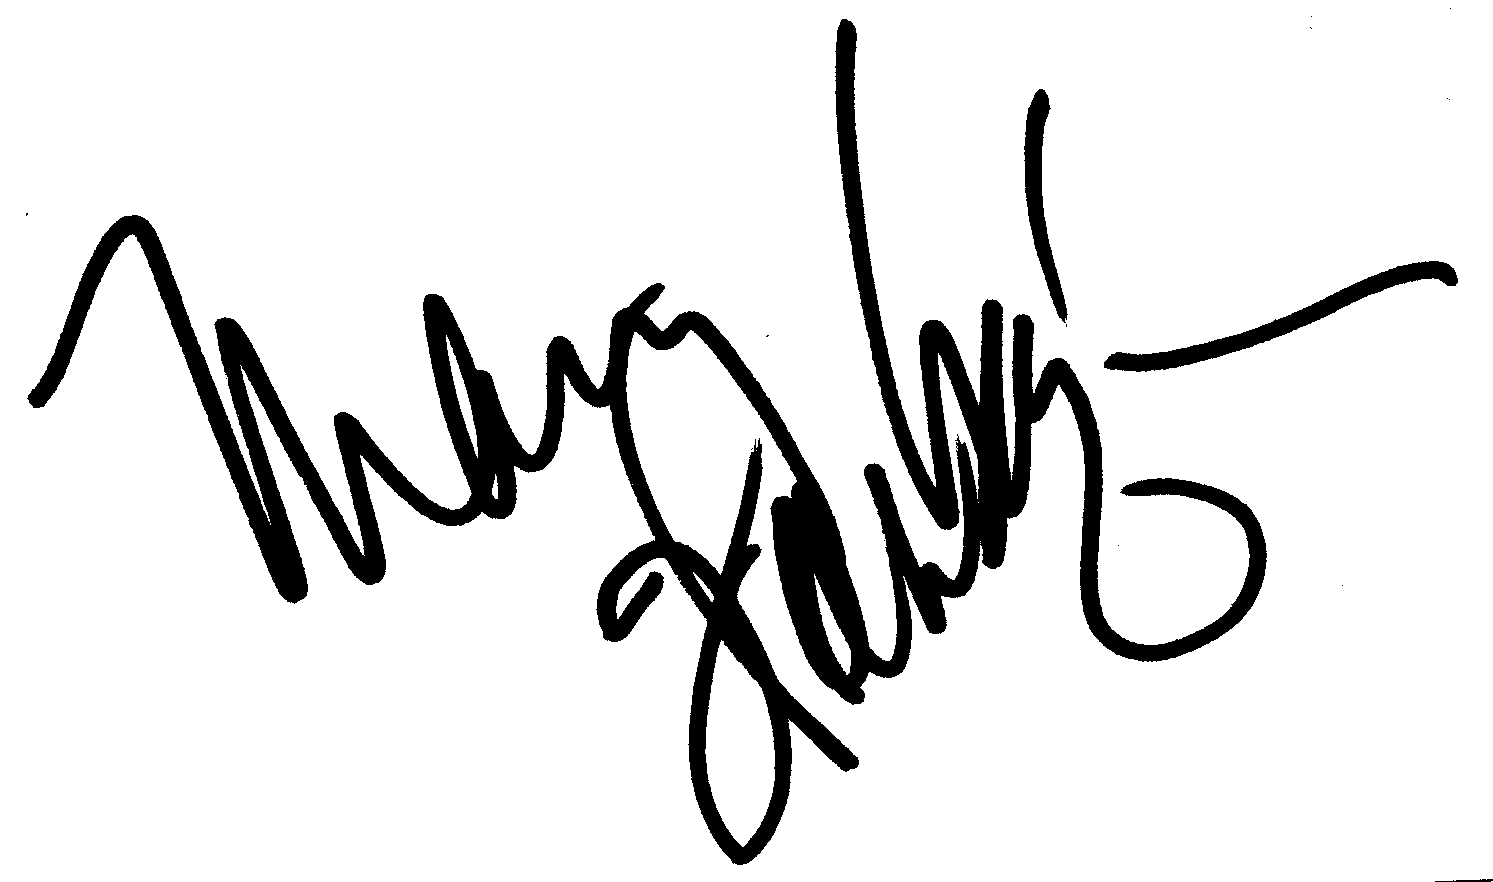 Mary Steenbergen autograph facsimile